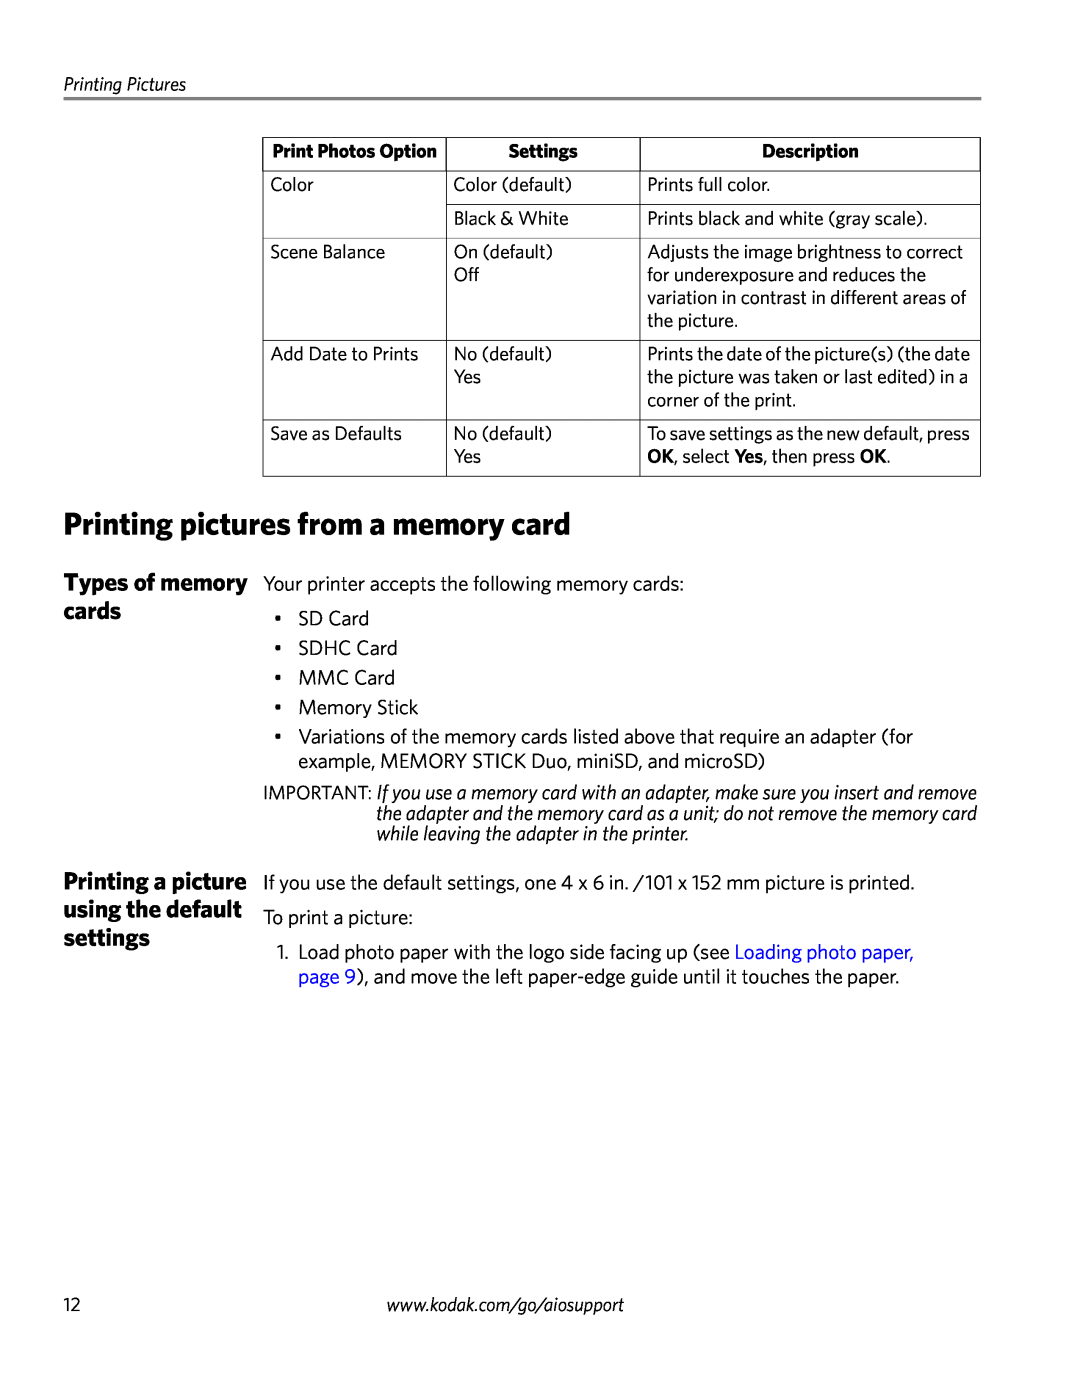 Kodak ESP 3260 Printing pictures from a memory card, Types of memory cards, Printing a picture using the default settings 